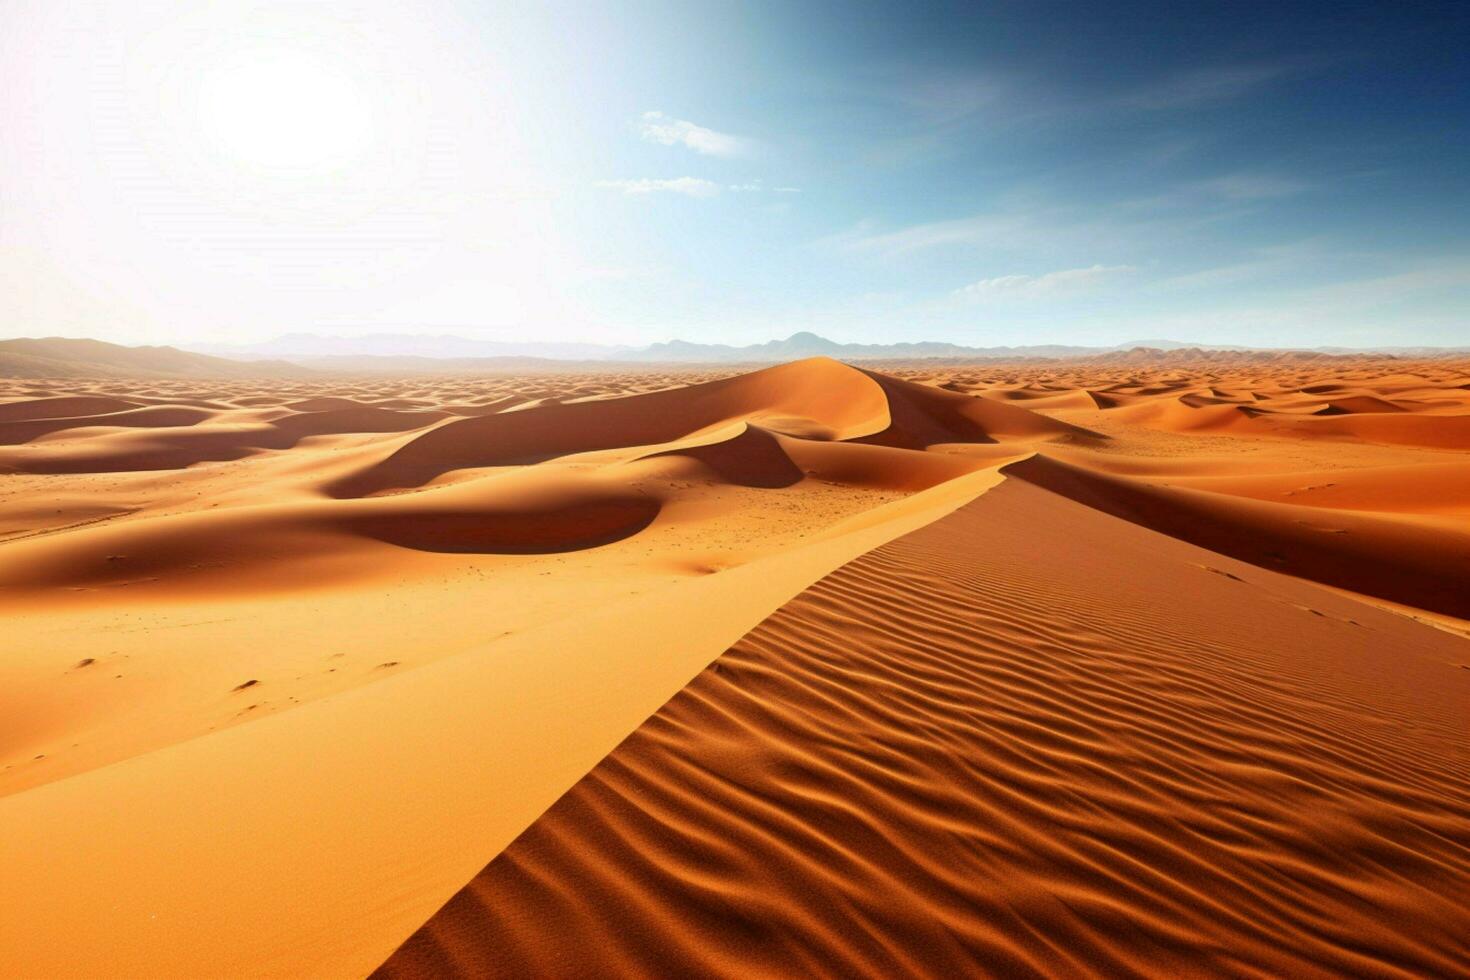 The vast expanse of the Sahara desert photo